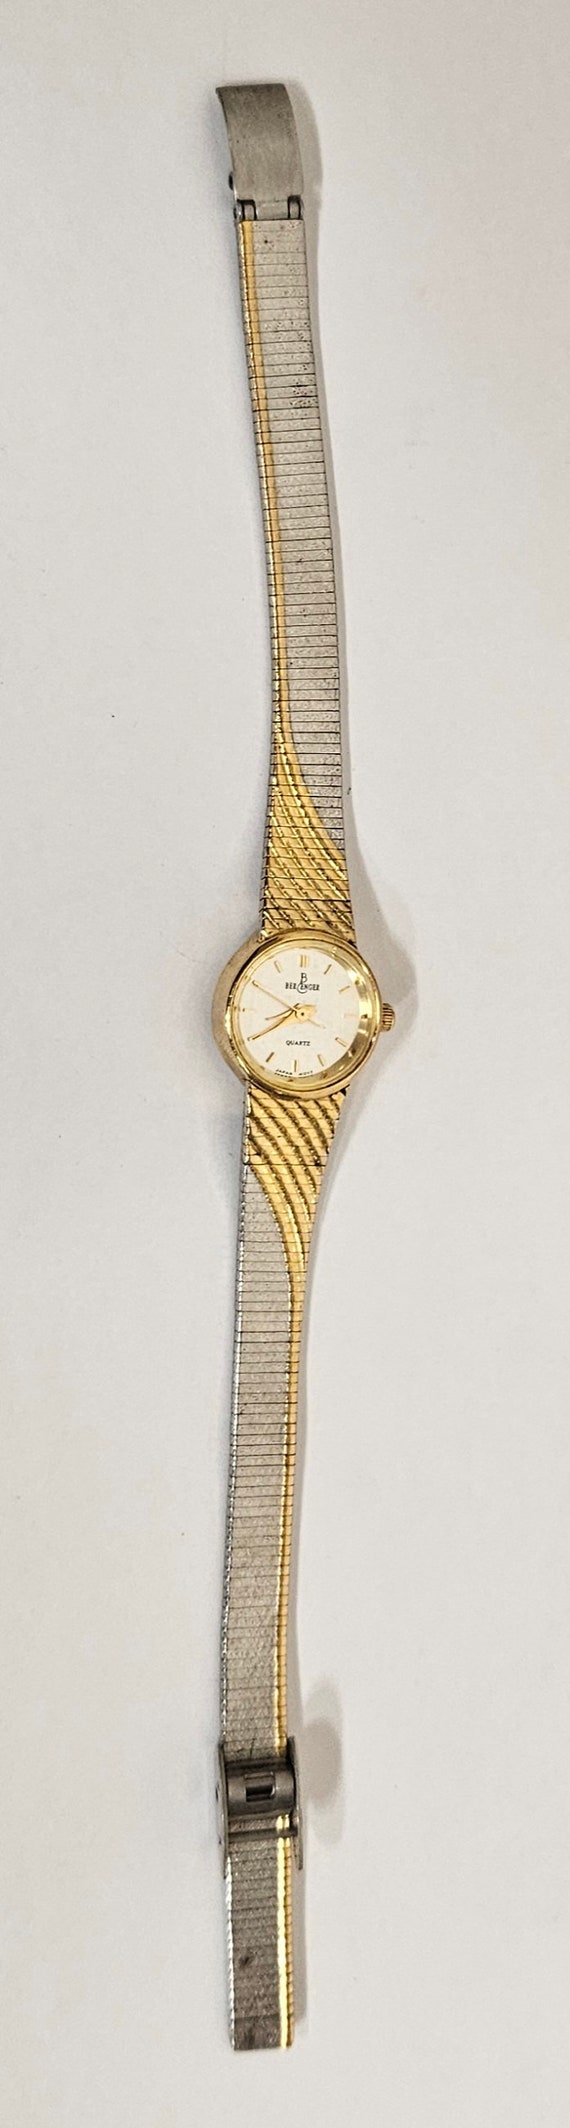 Vintage 1980s Womens Berenger 2-Tone Watch. Works 